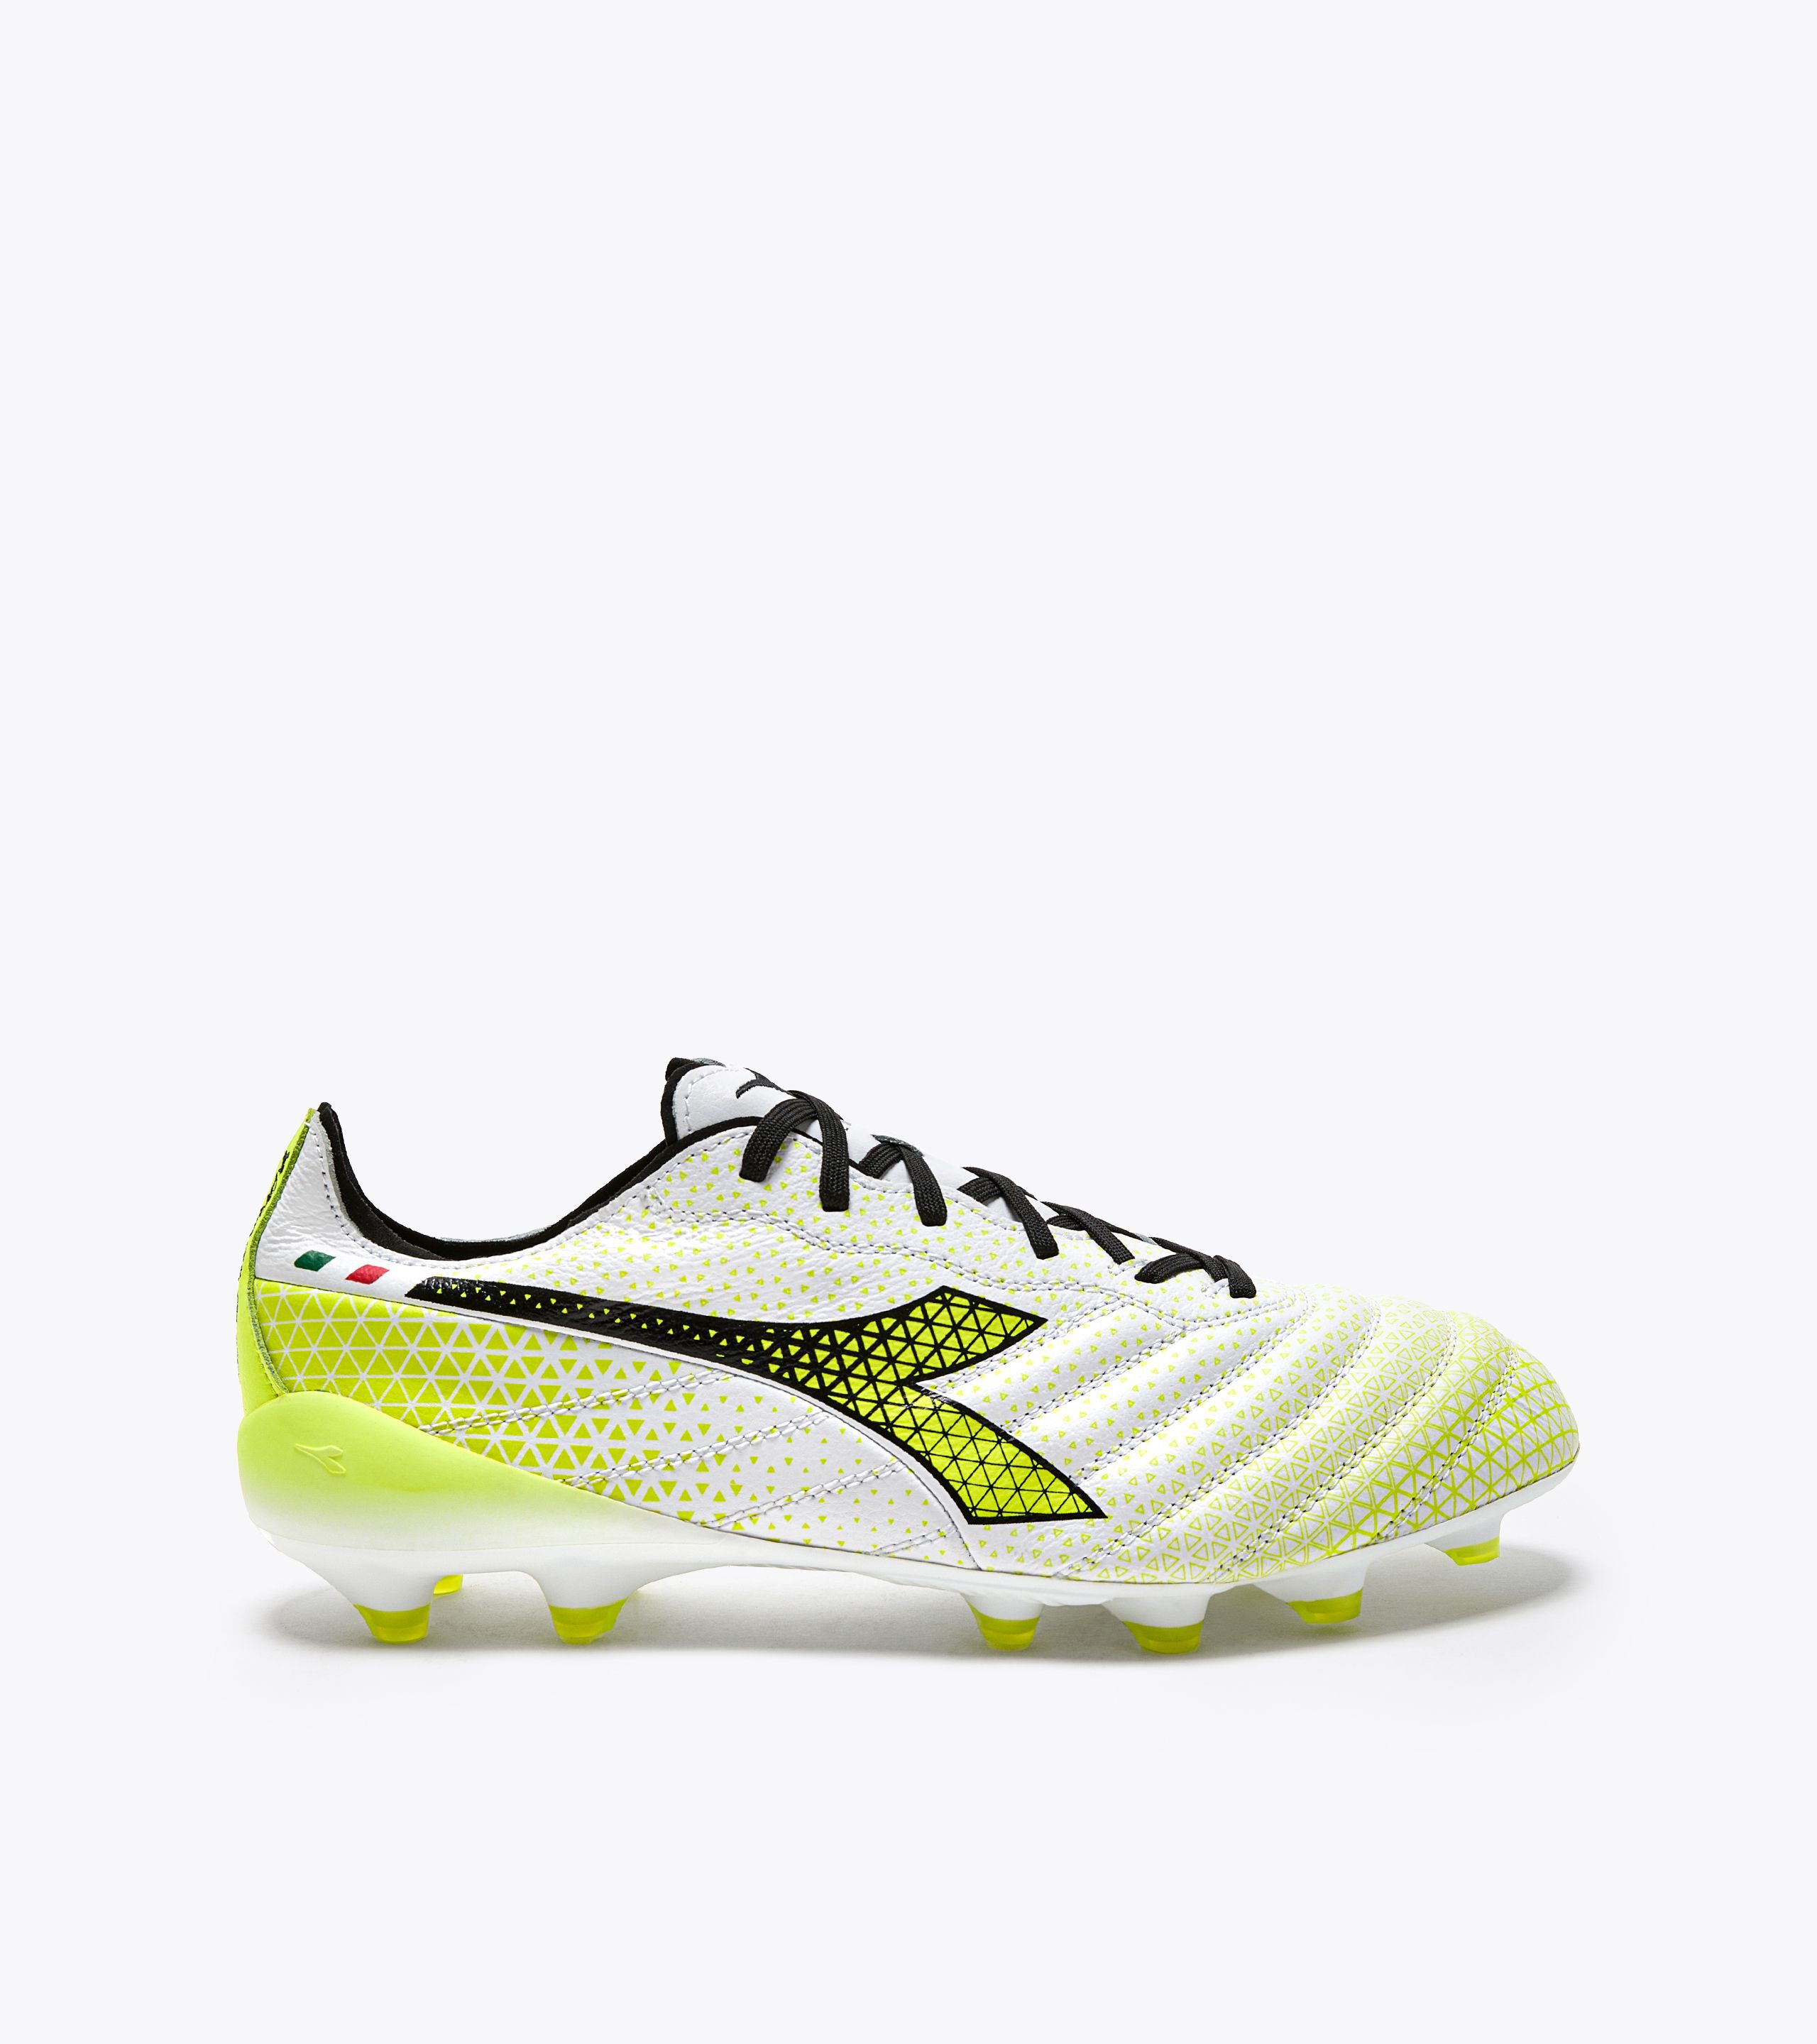 Diadora Brasil football Cleats & Shoes - Diadora Online Shop